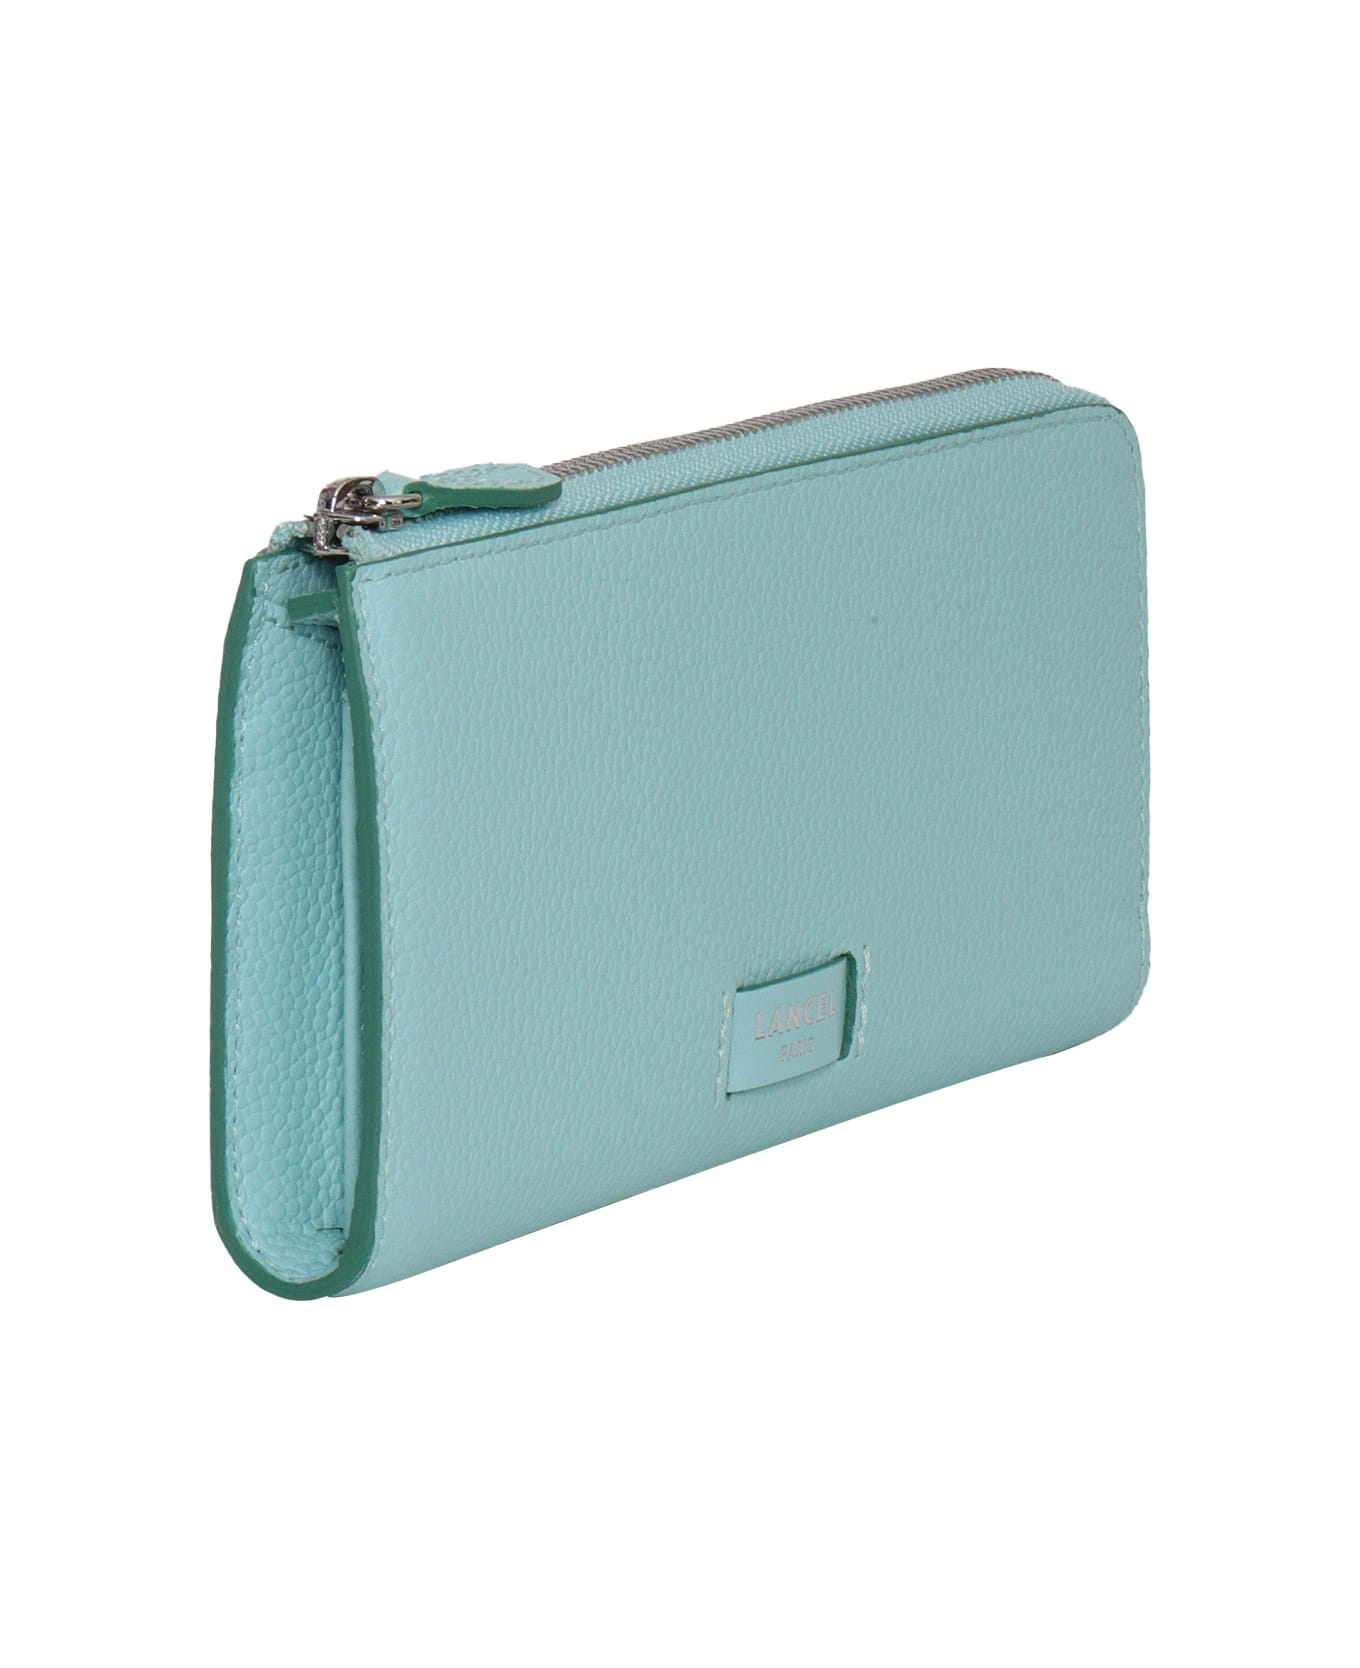 Lancel Light Blue Leather Wallet - GREEN